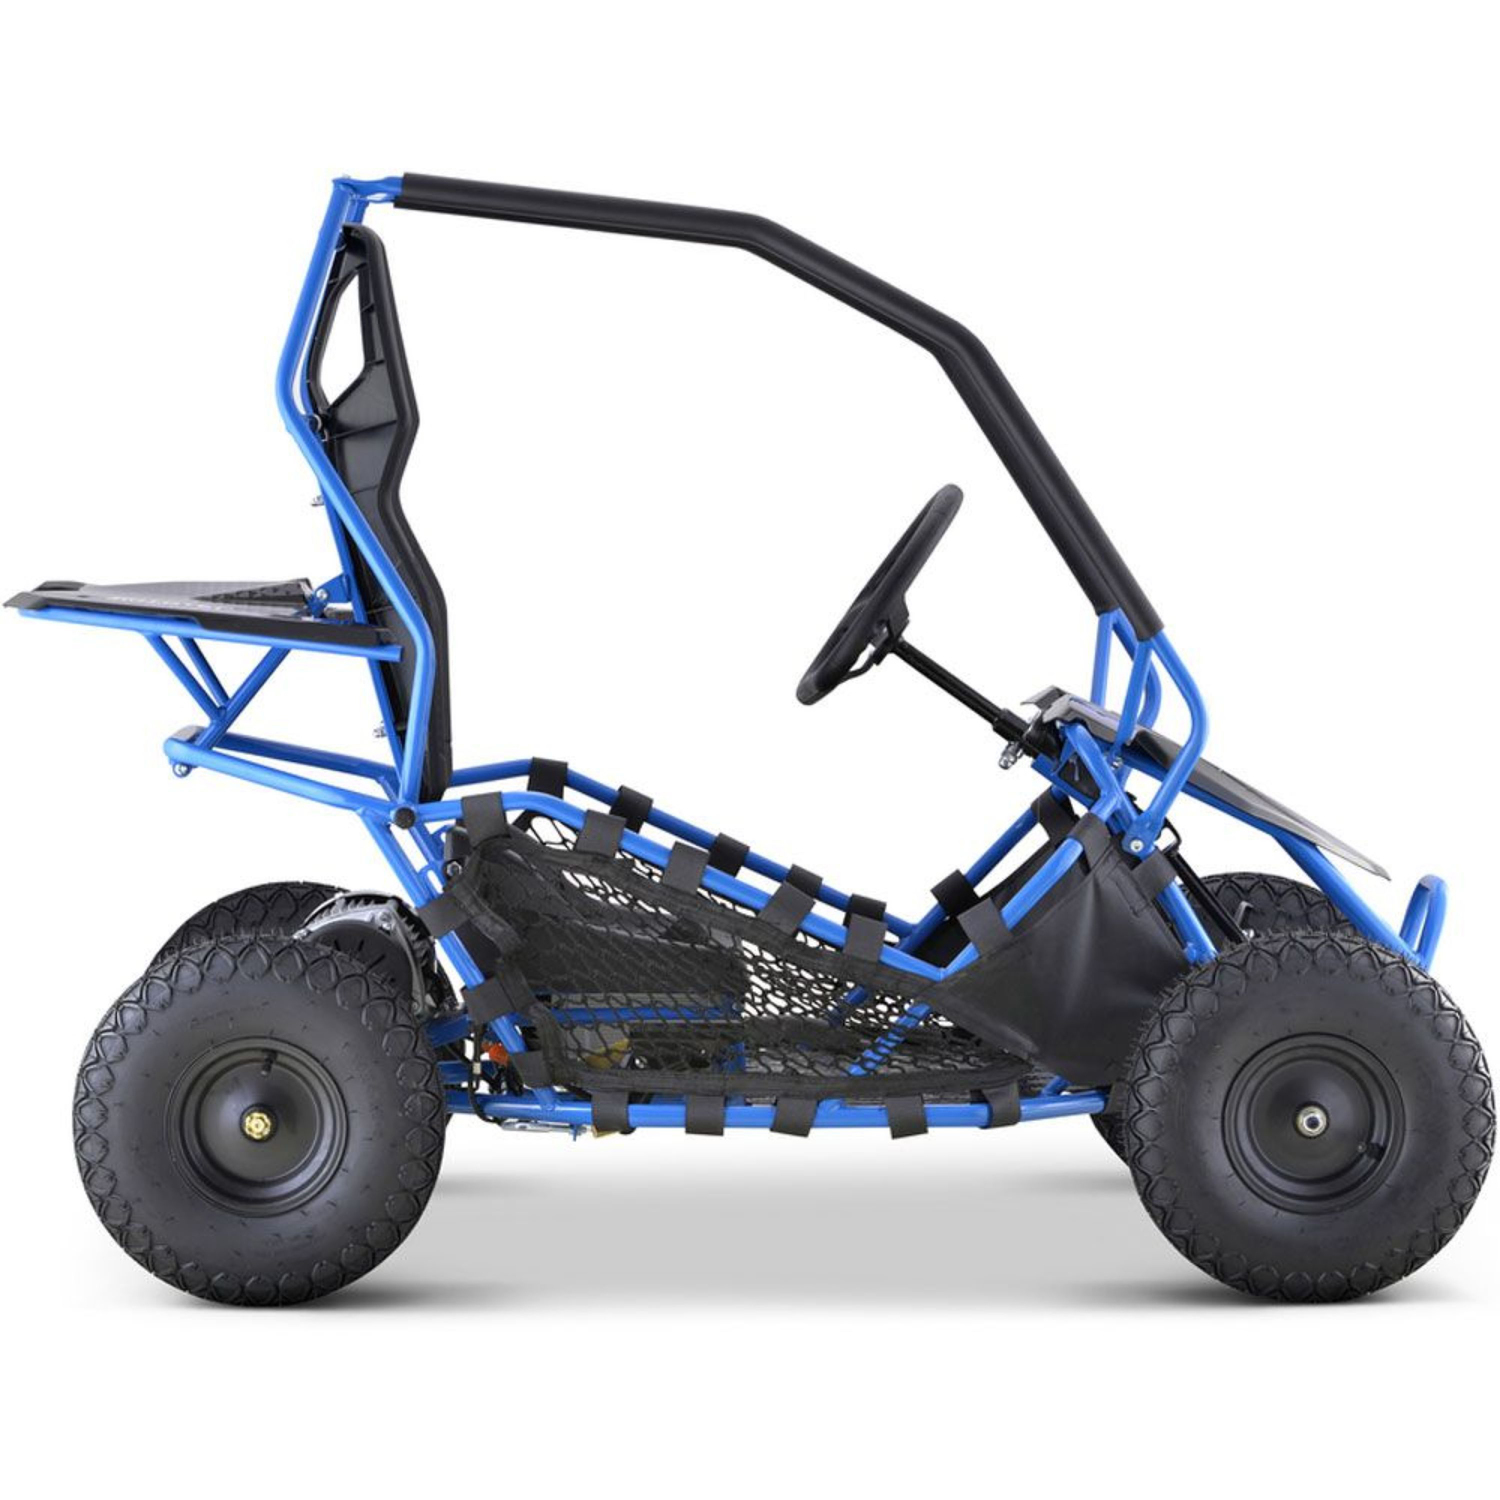 MotoTec Maverick Electric Go Kart 36v 1000w Blue - image 2 of 8